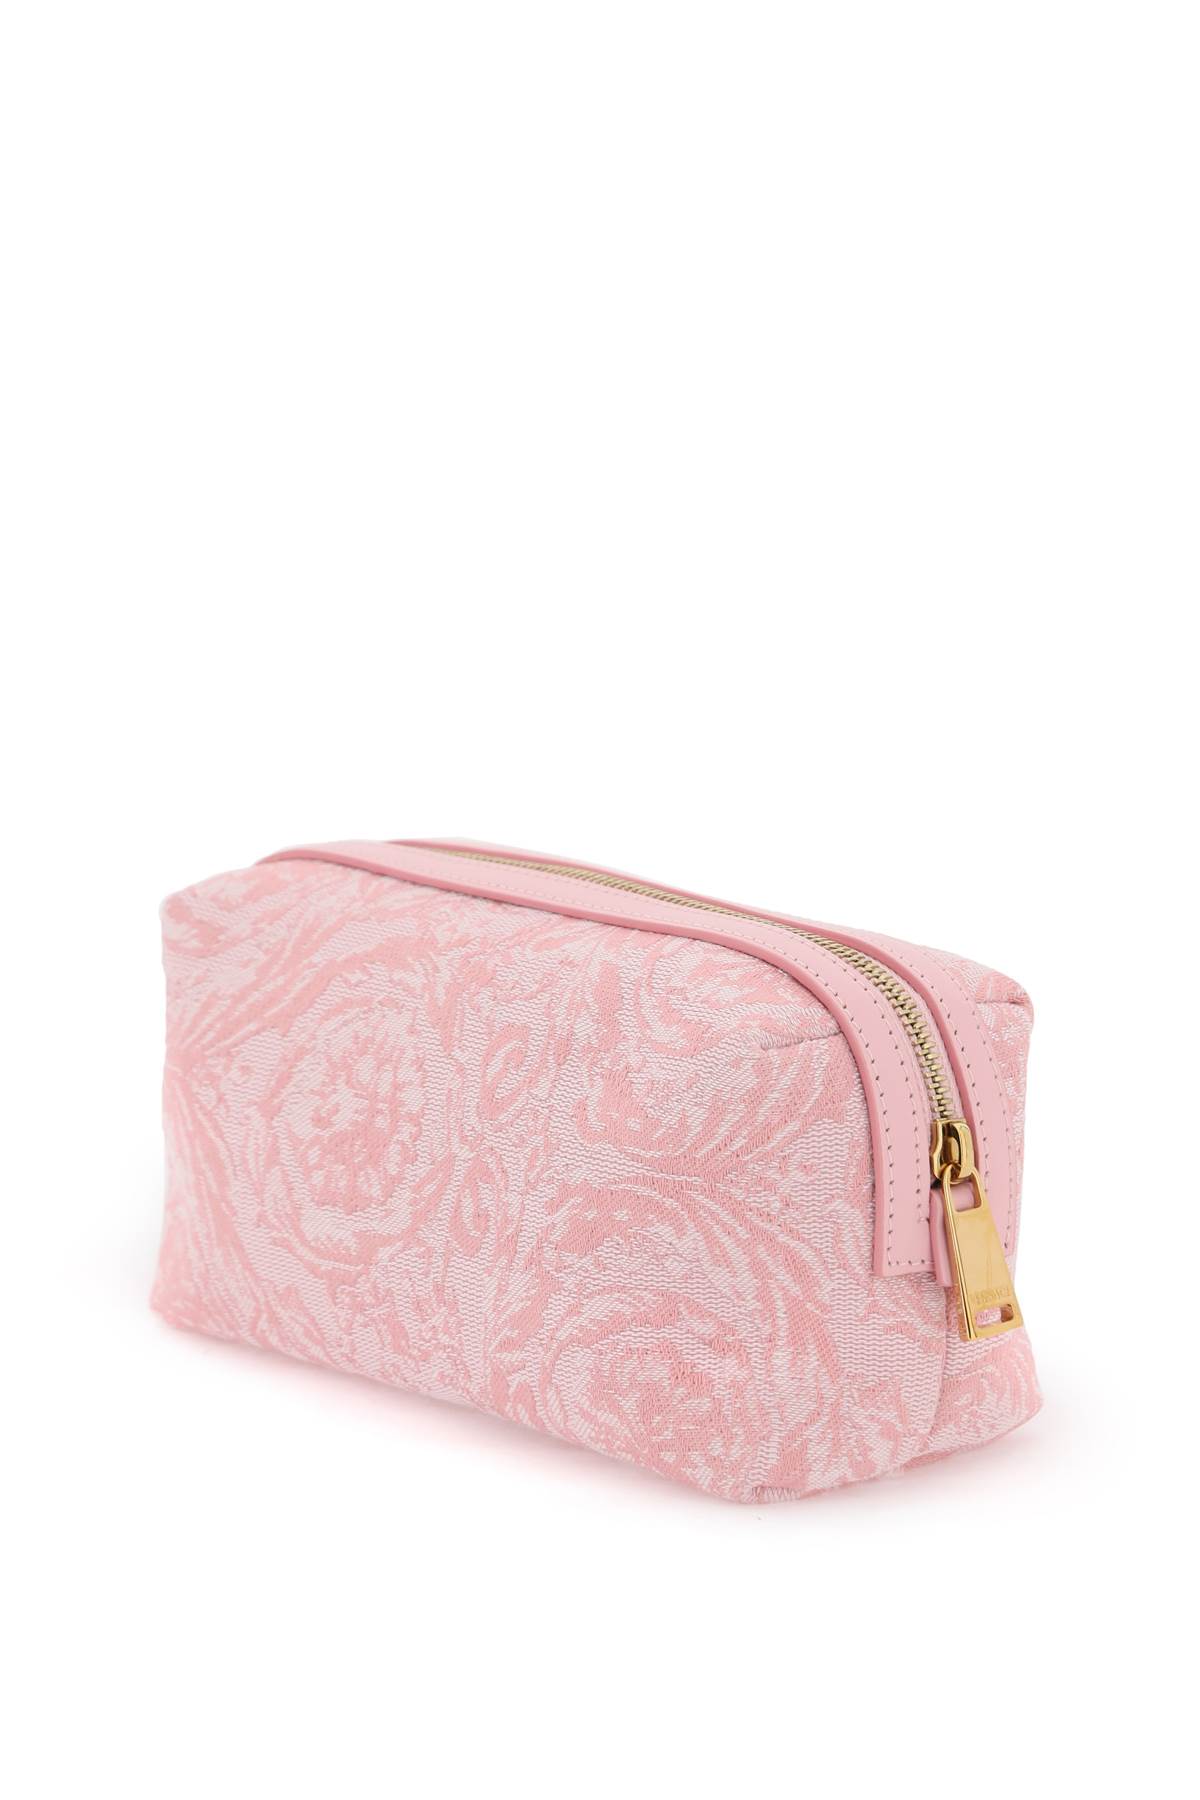 Shop Versace Barocco Vanity Case In Pale Pink English Rose Ve (pink)